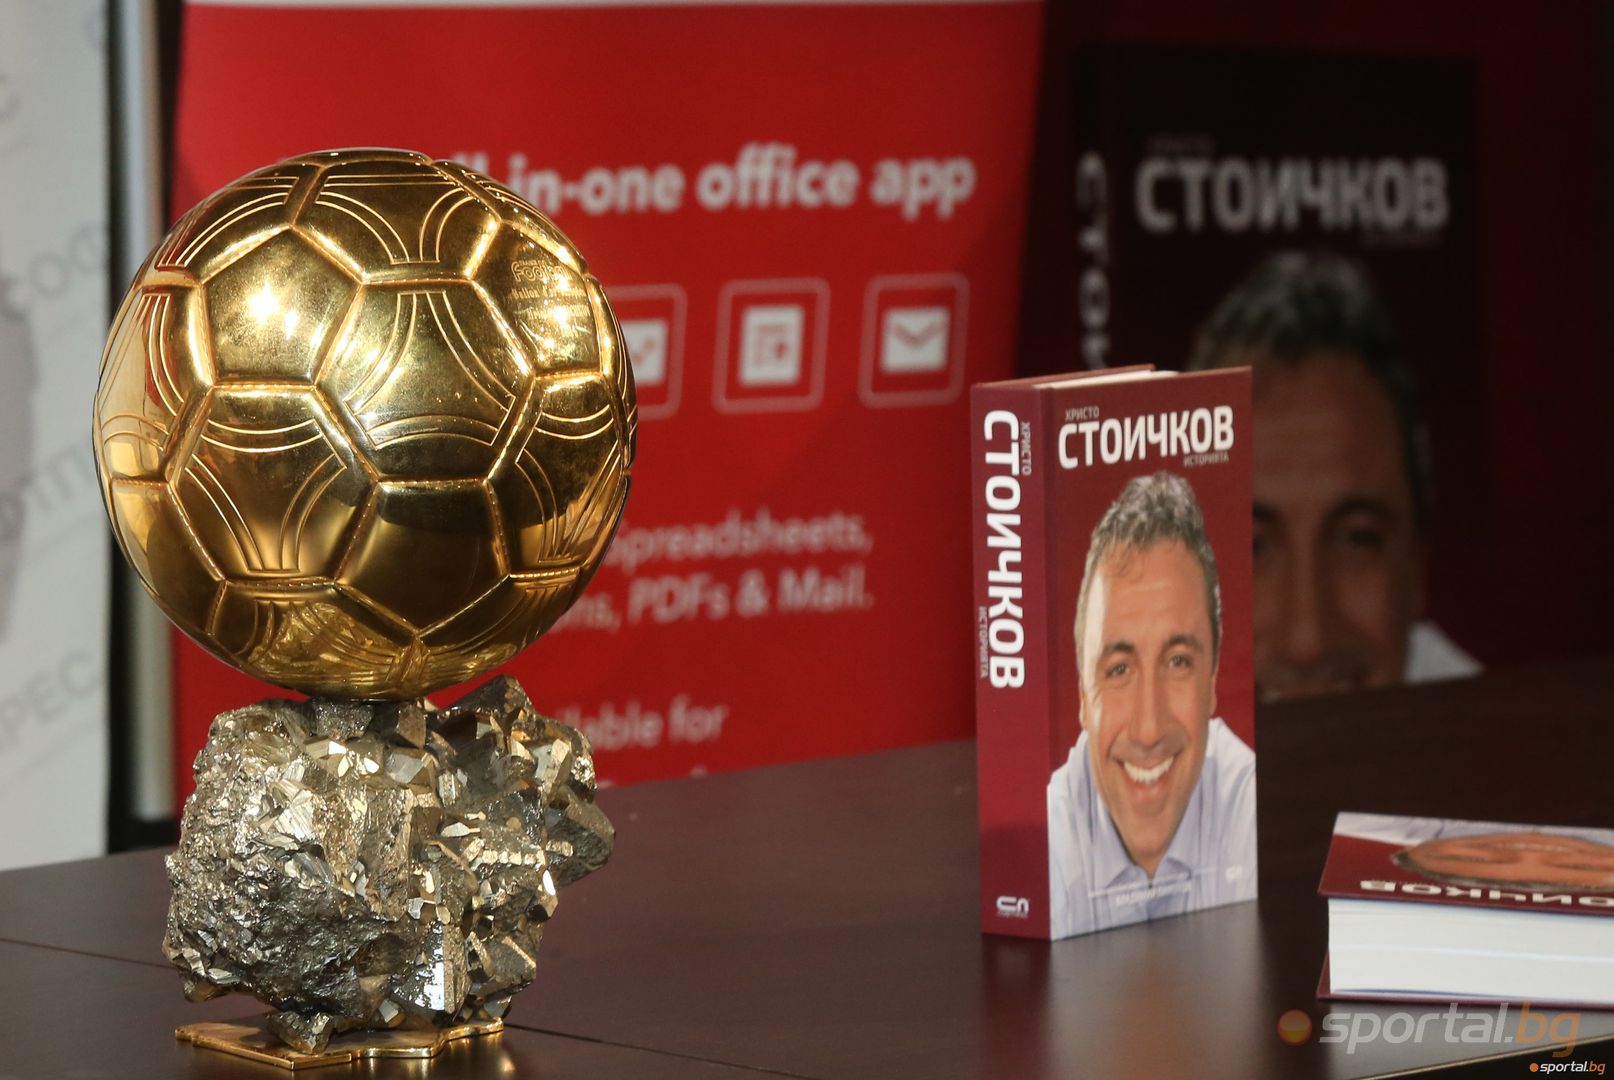 Христо Стоичков  показа златната топка на феновете